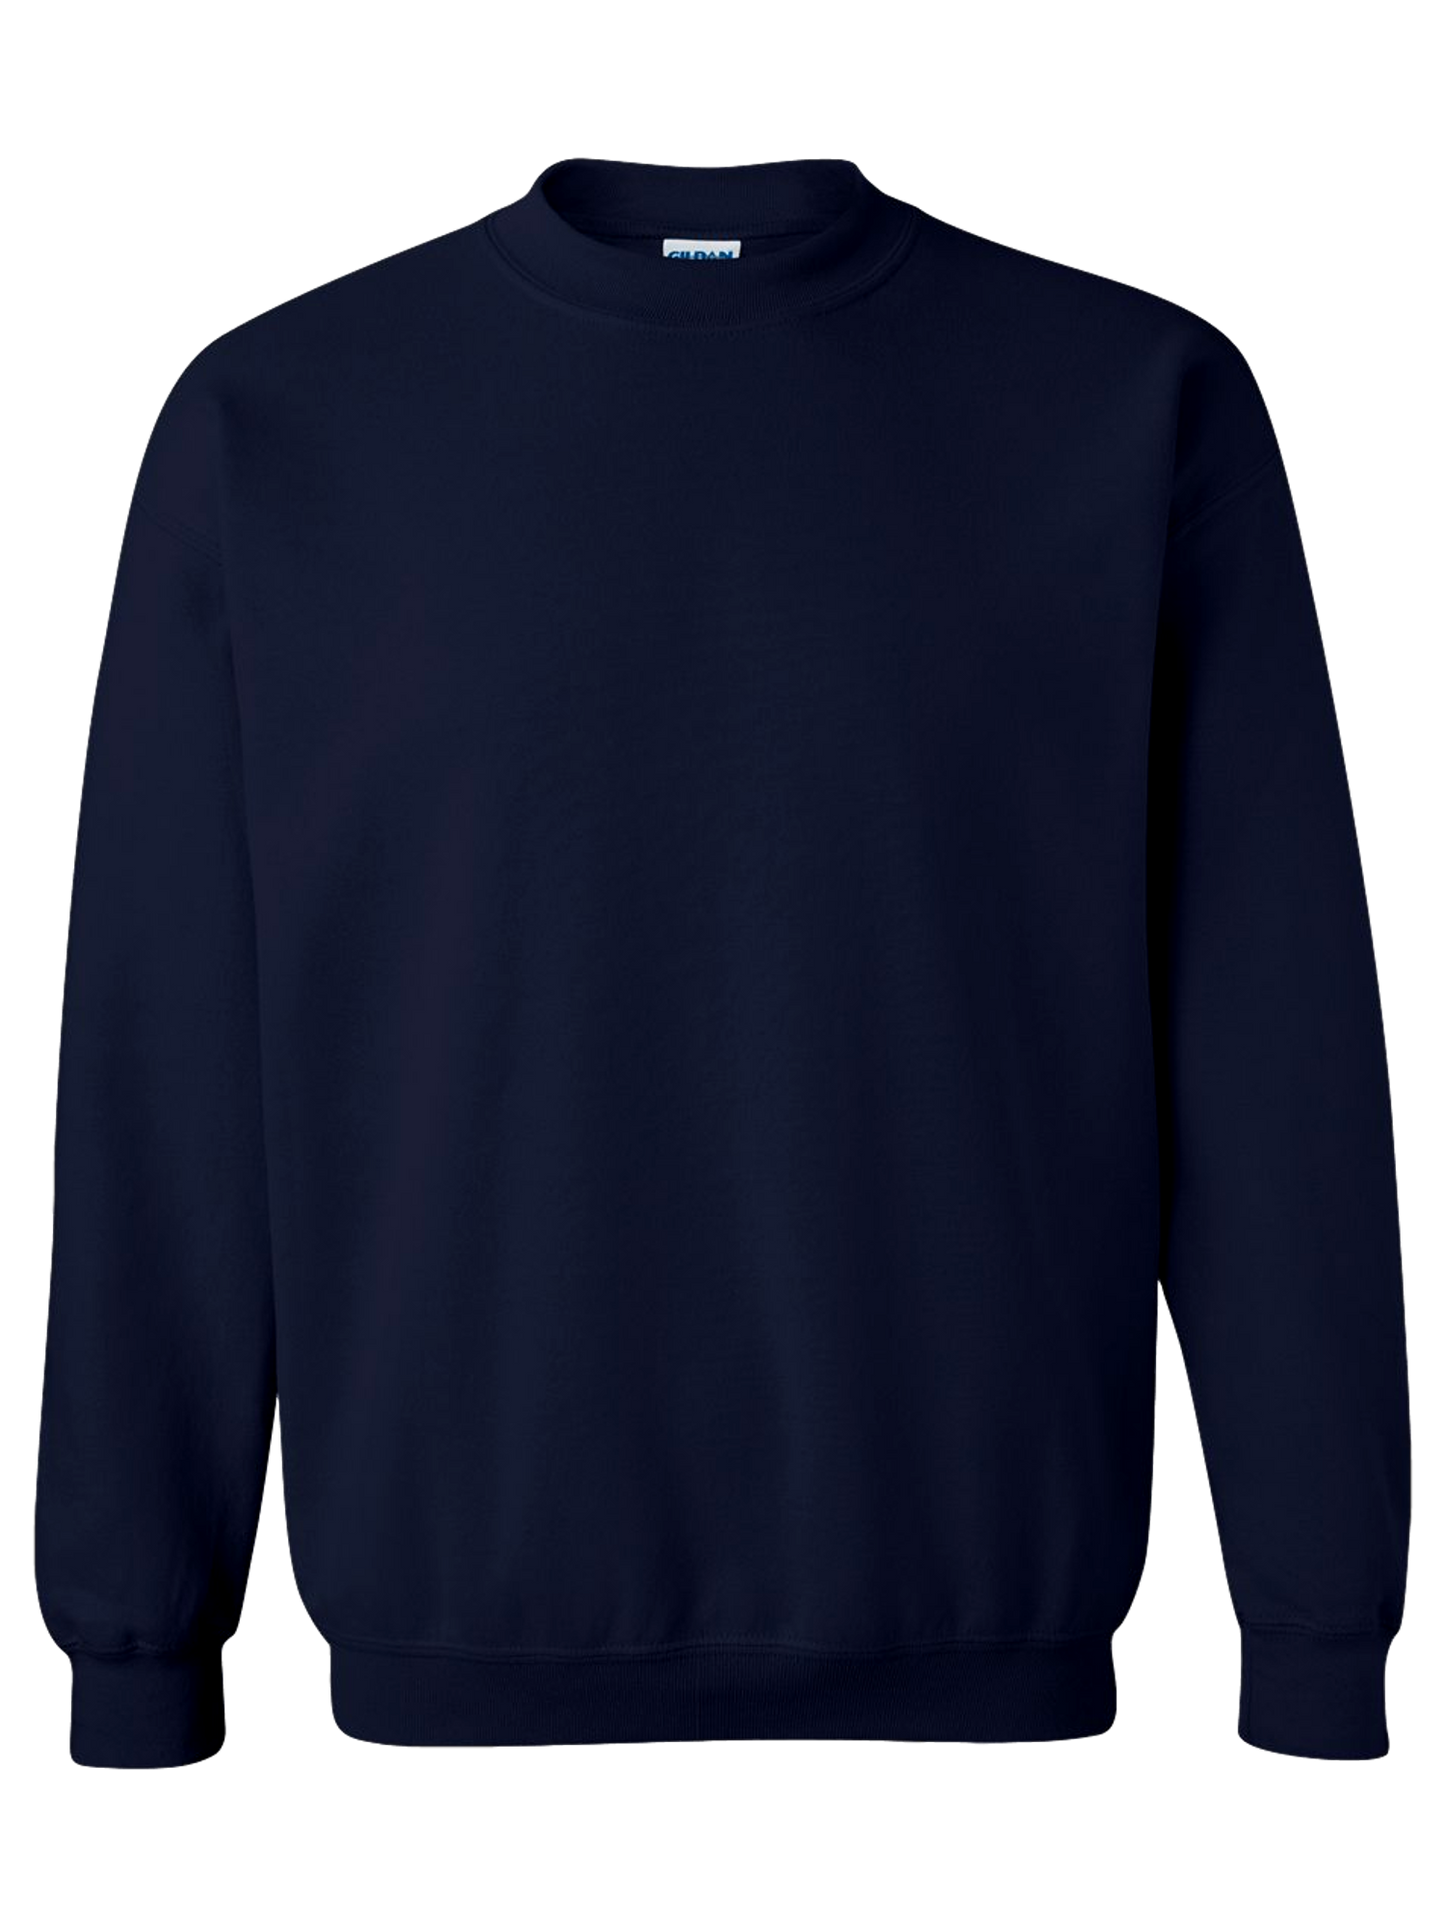 Navy blue Sweatshirt